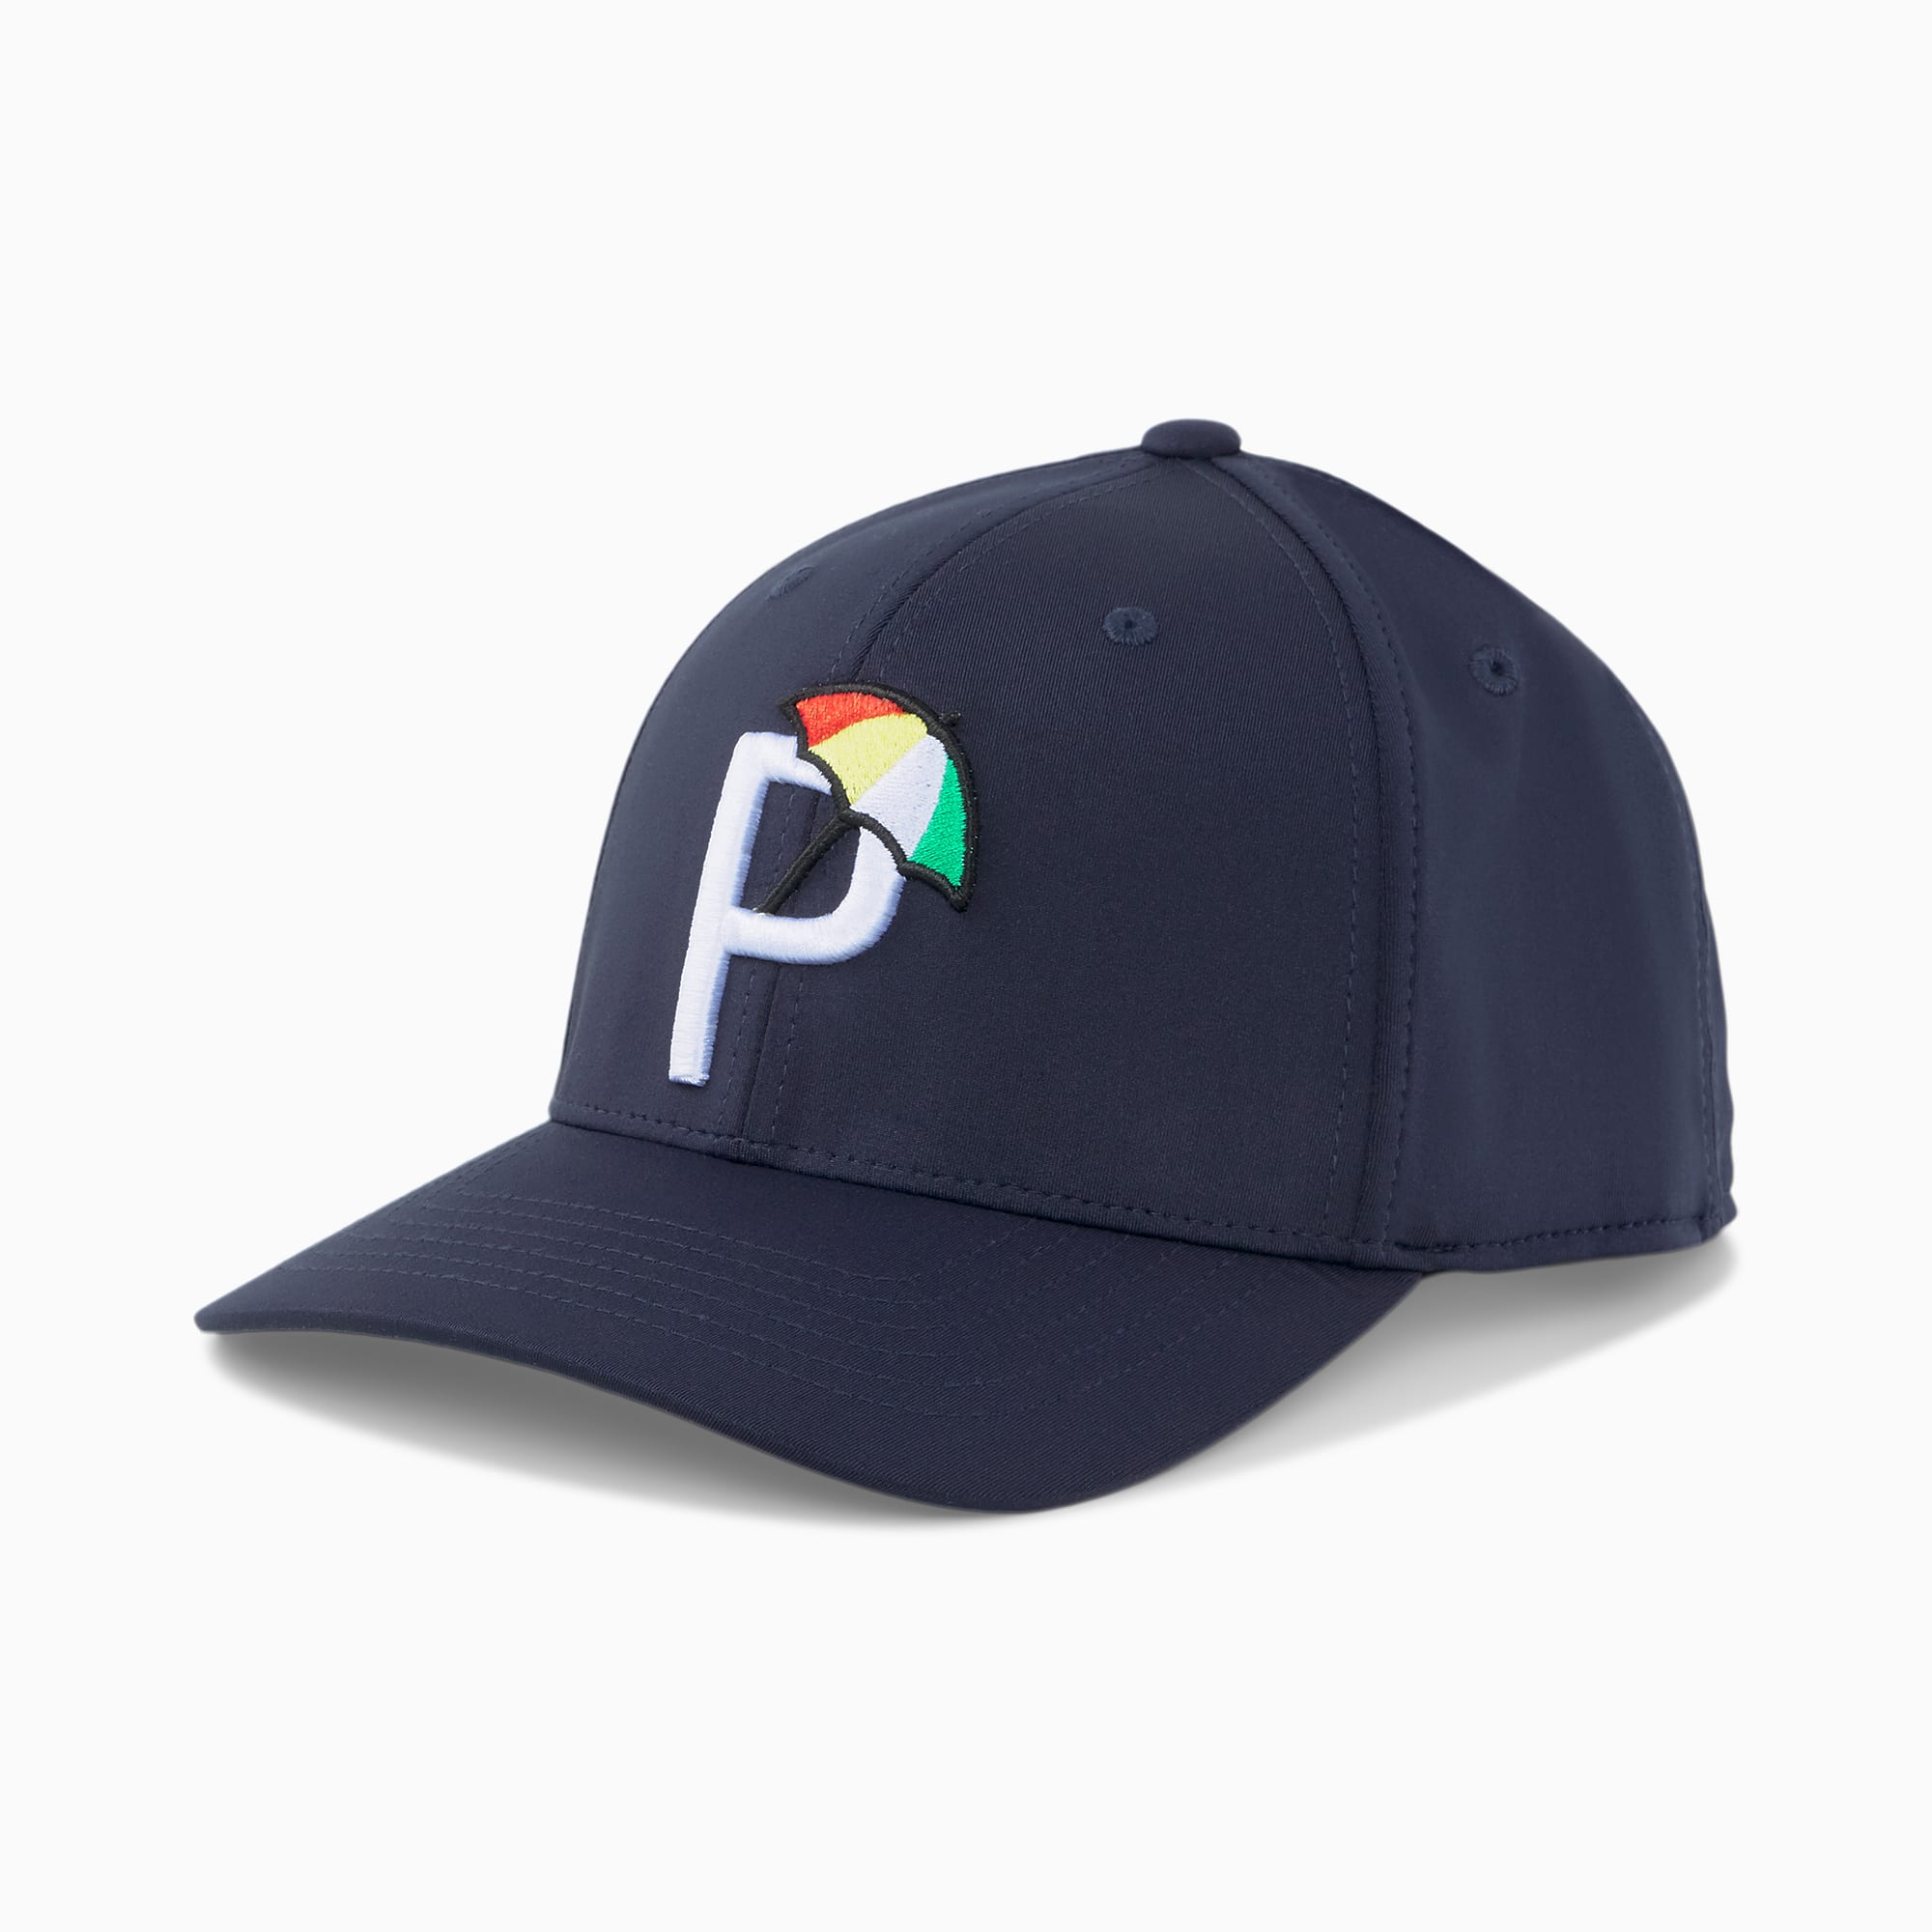 Men's PUMA Palmer P Golf Cap, Dark Blue